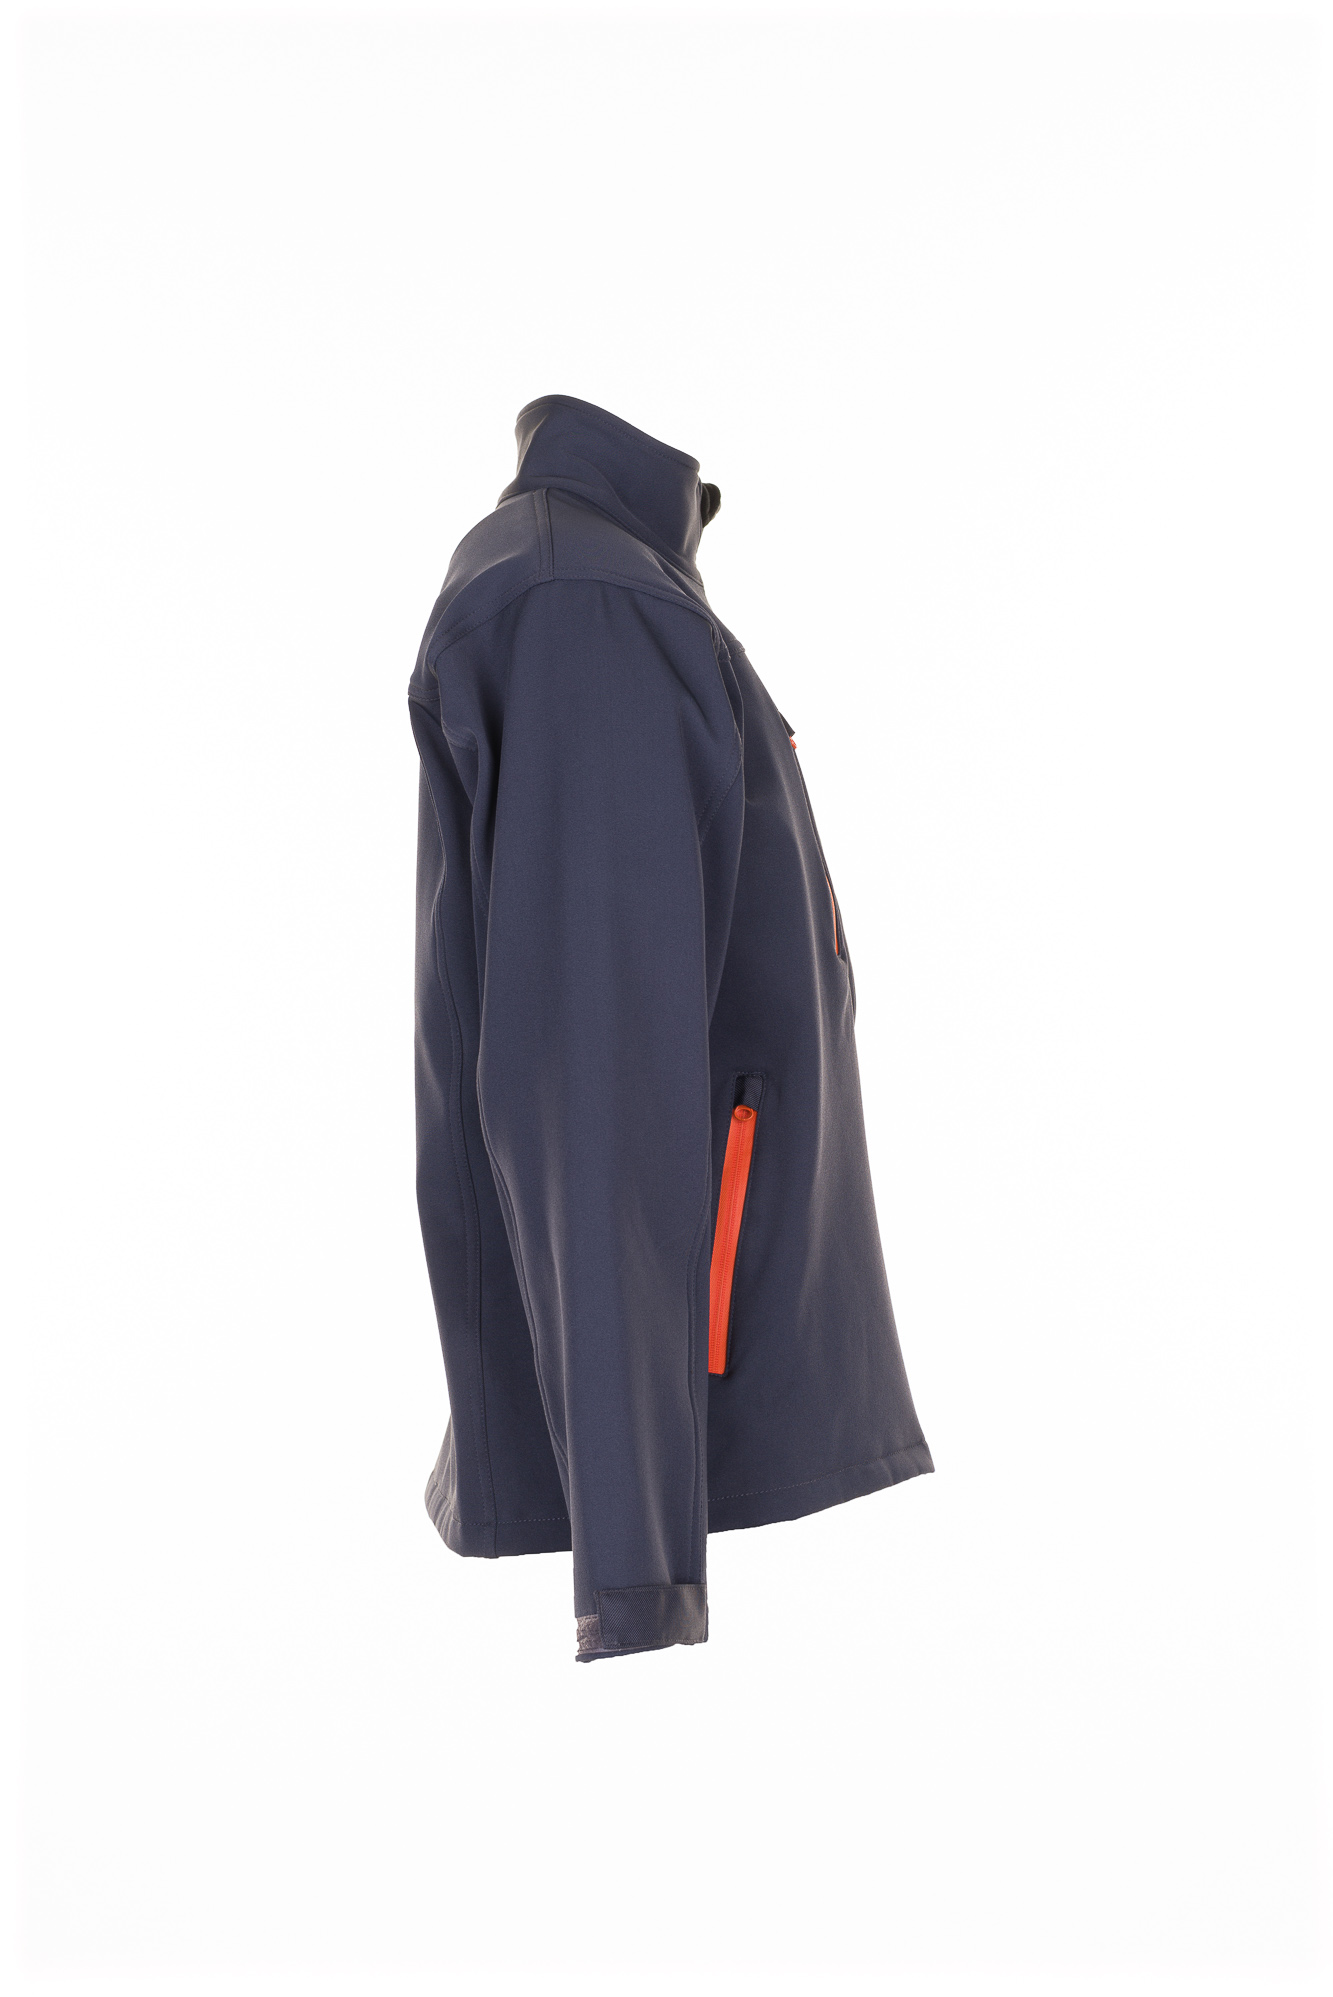 Planam Timberguard Softshelljacke Arbeitsjacke Softshell Jacke Größe S - 4XL, in 2 Farben